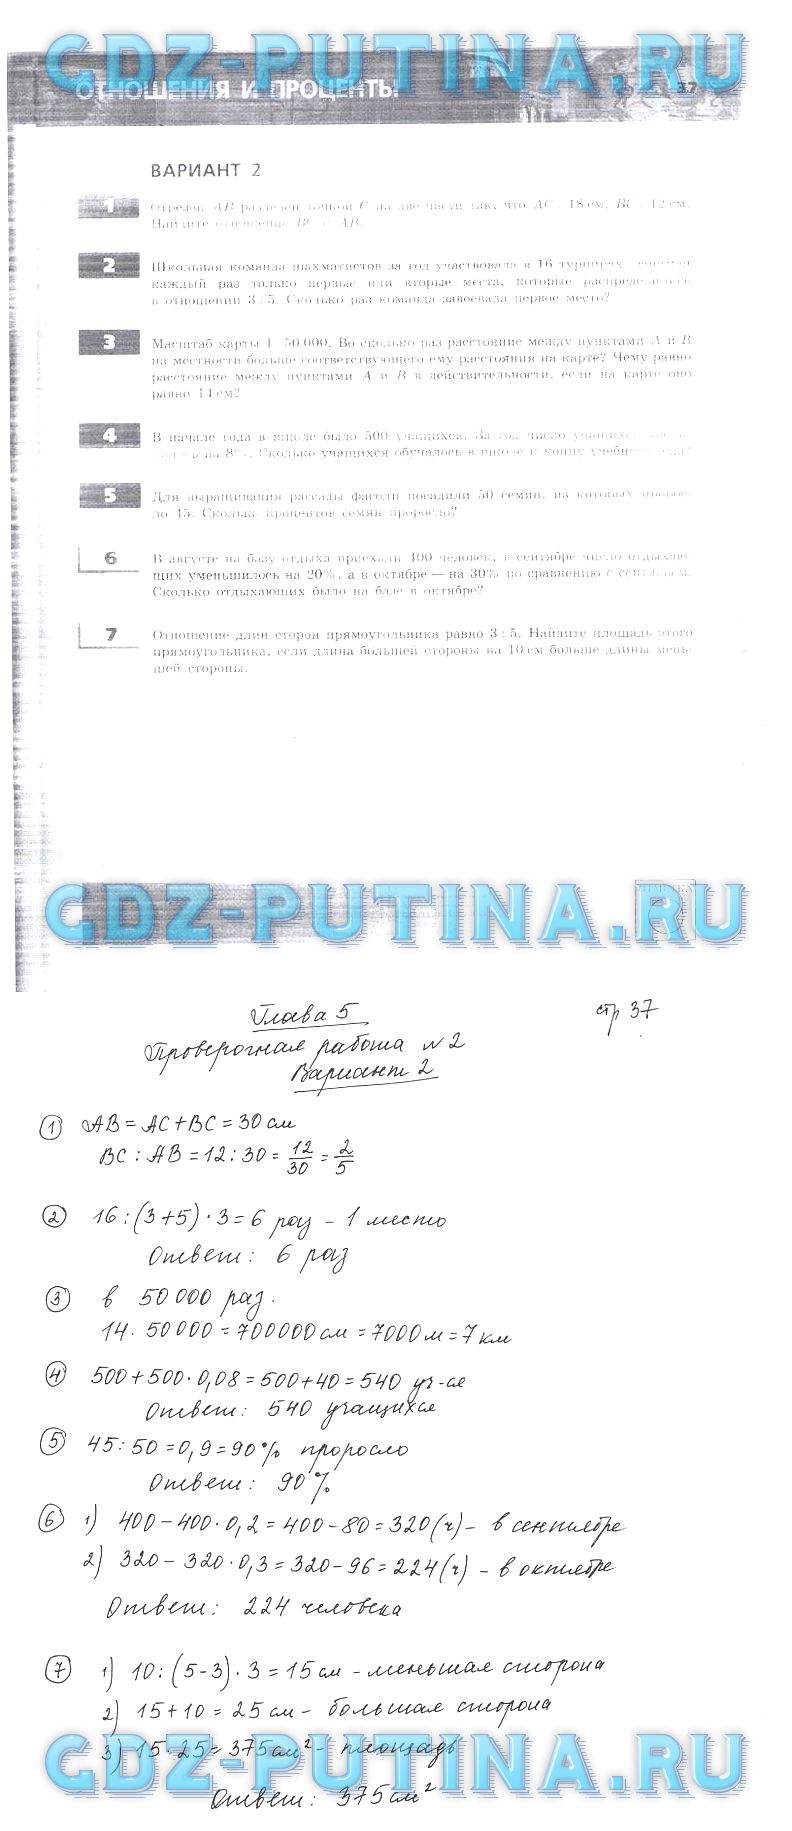 гдз 6 класс тетрадь-экзаменатор страница 37 математика Кузнецова